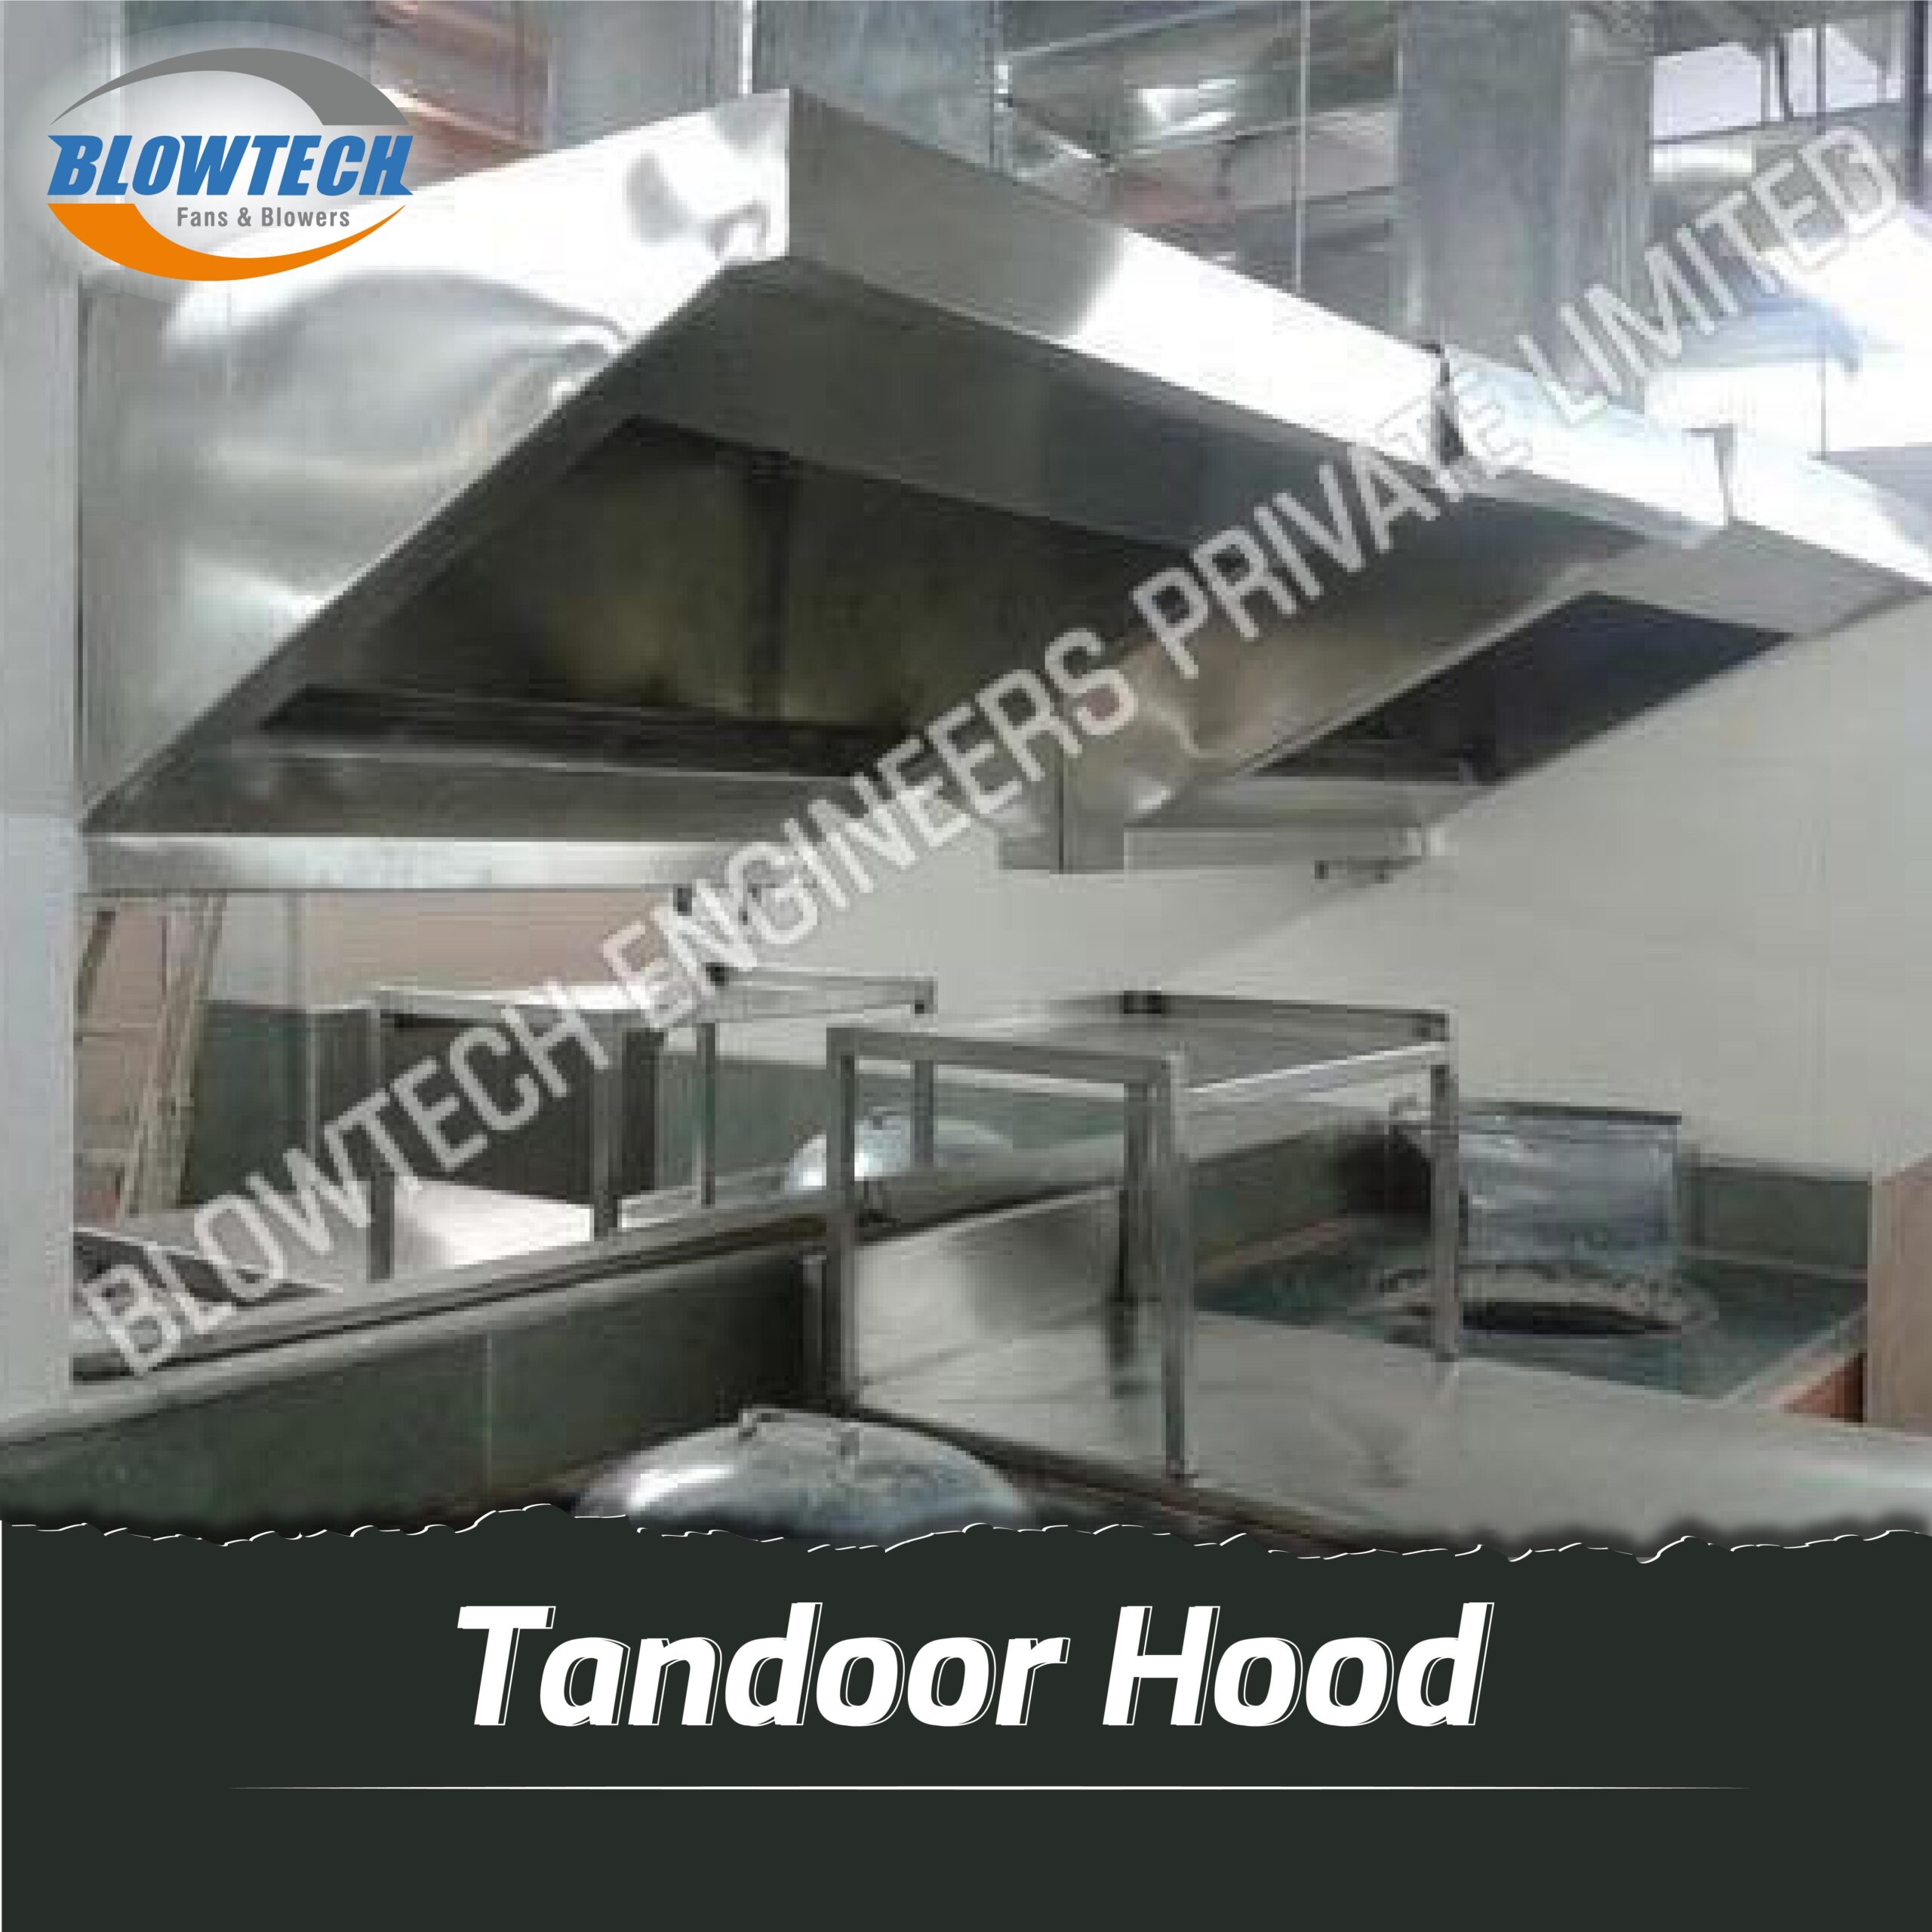 Tandoor Hood  manufacturer, supplier and exporter in Mumbai, India